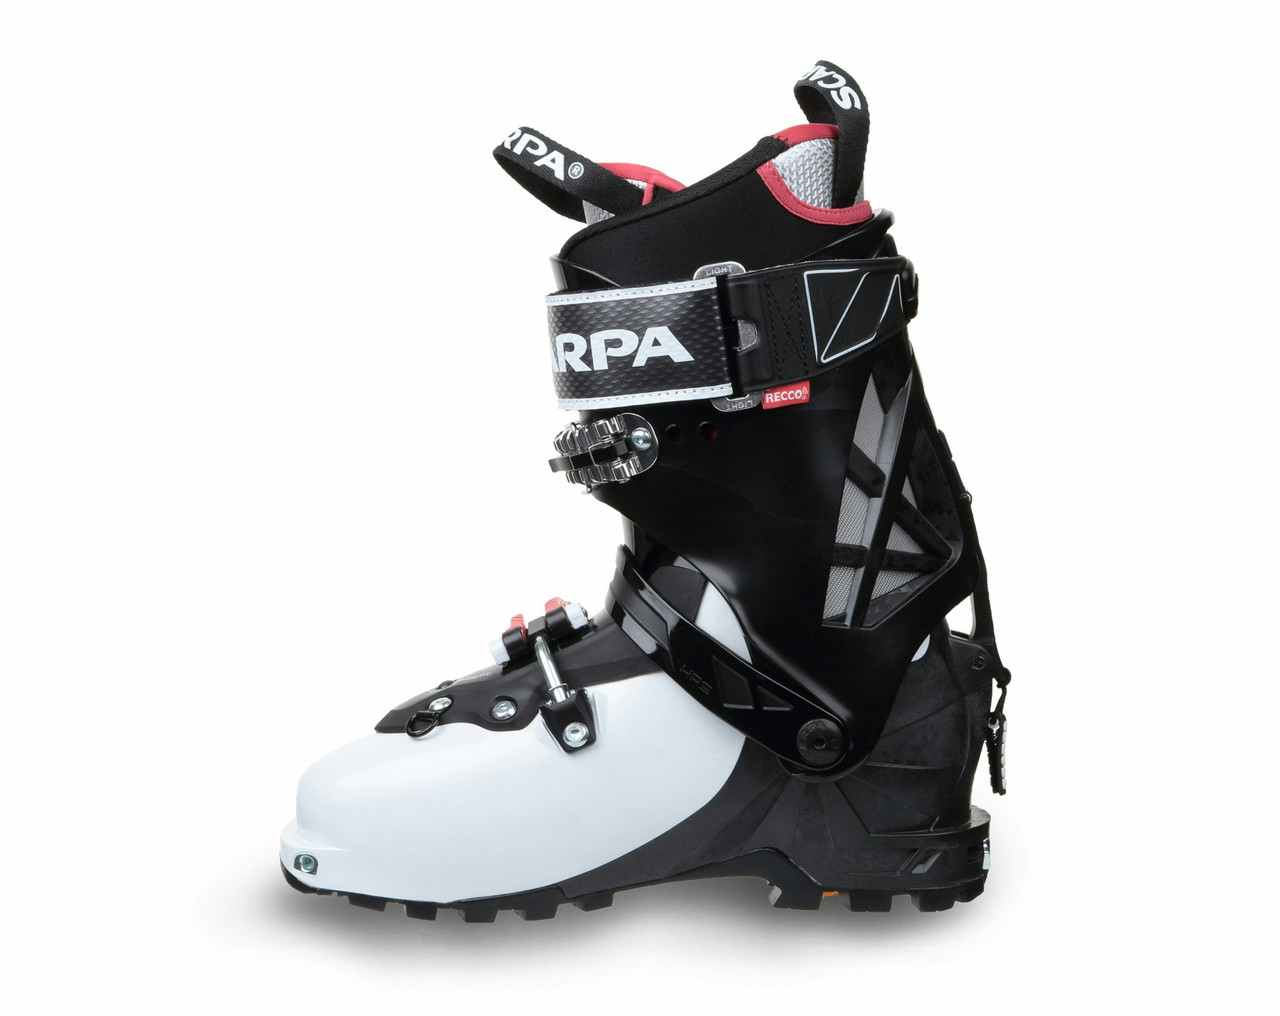 Gea RS Ski Boots White/Black/WarmRed